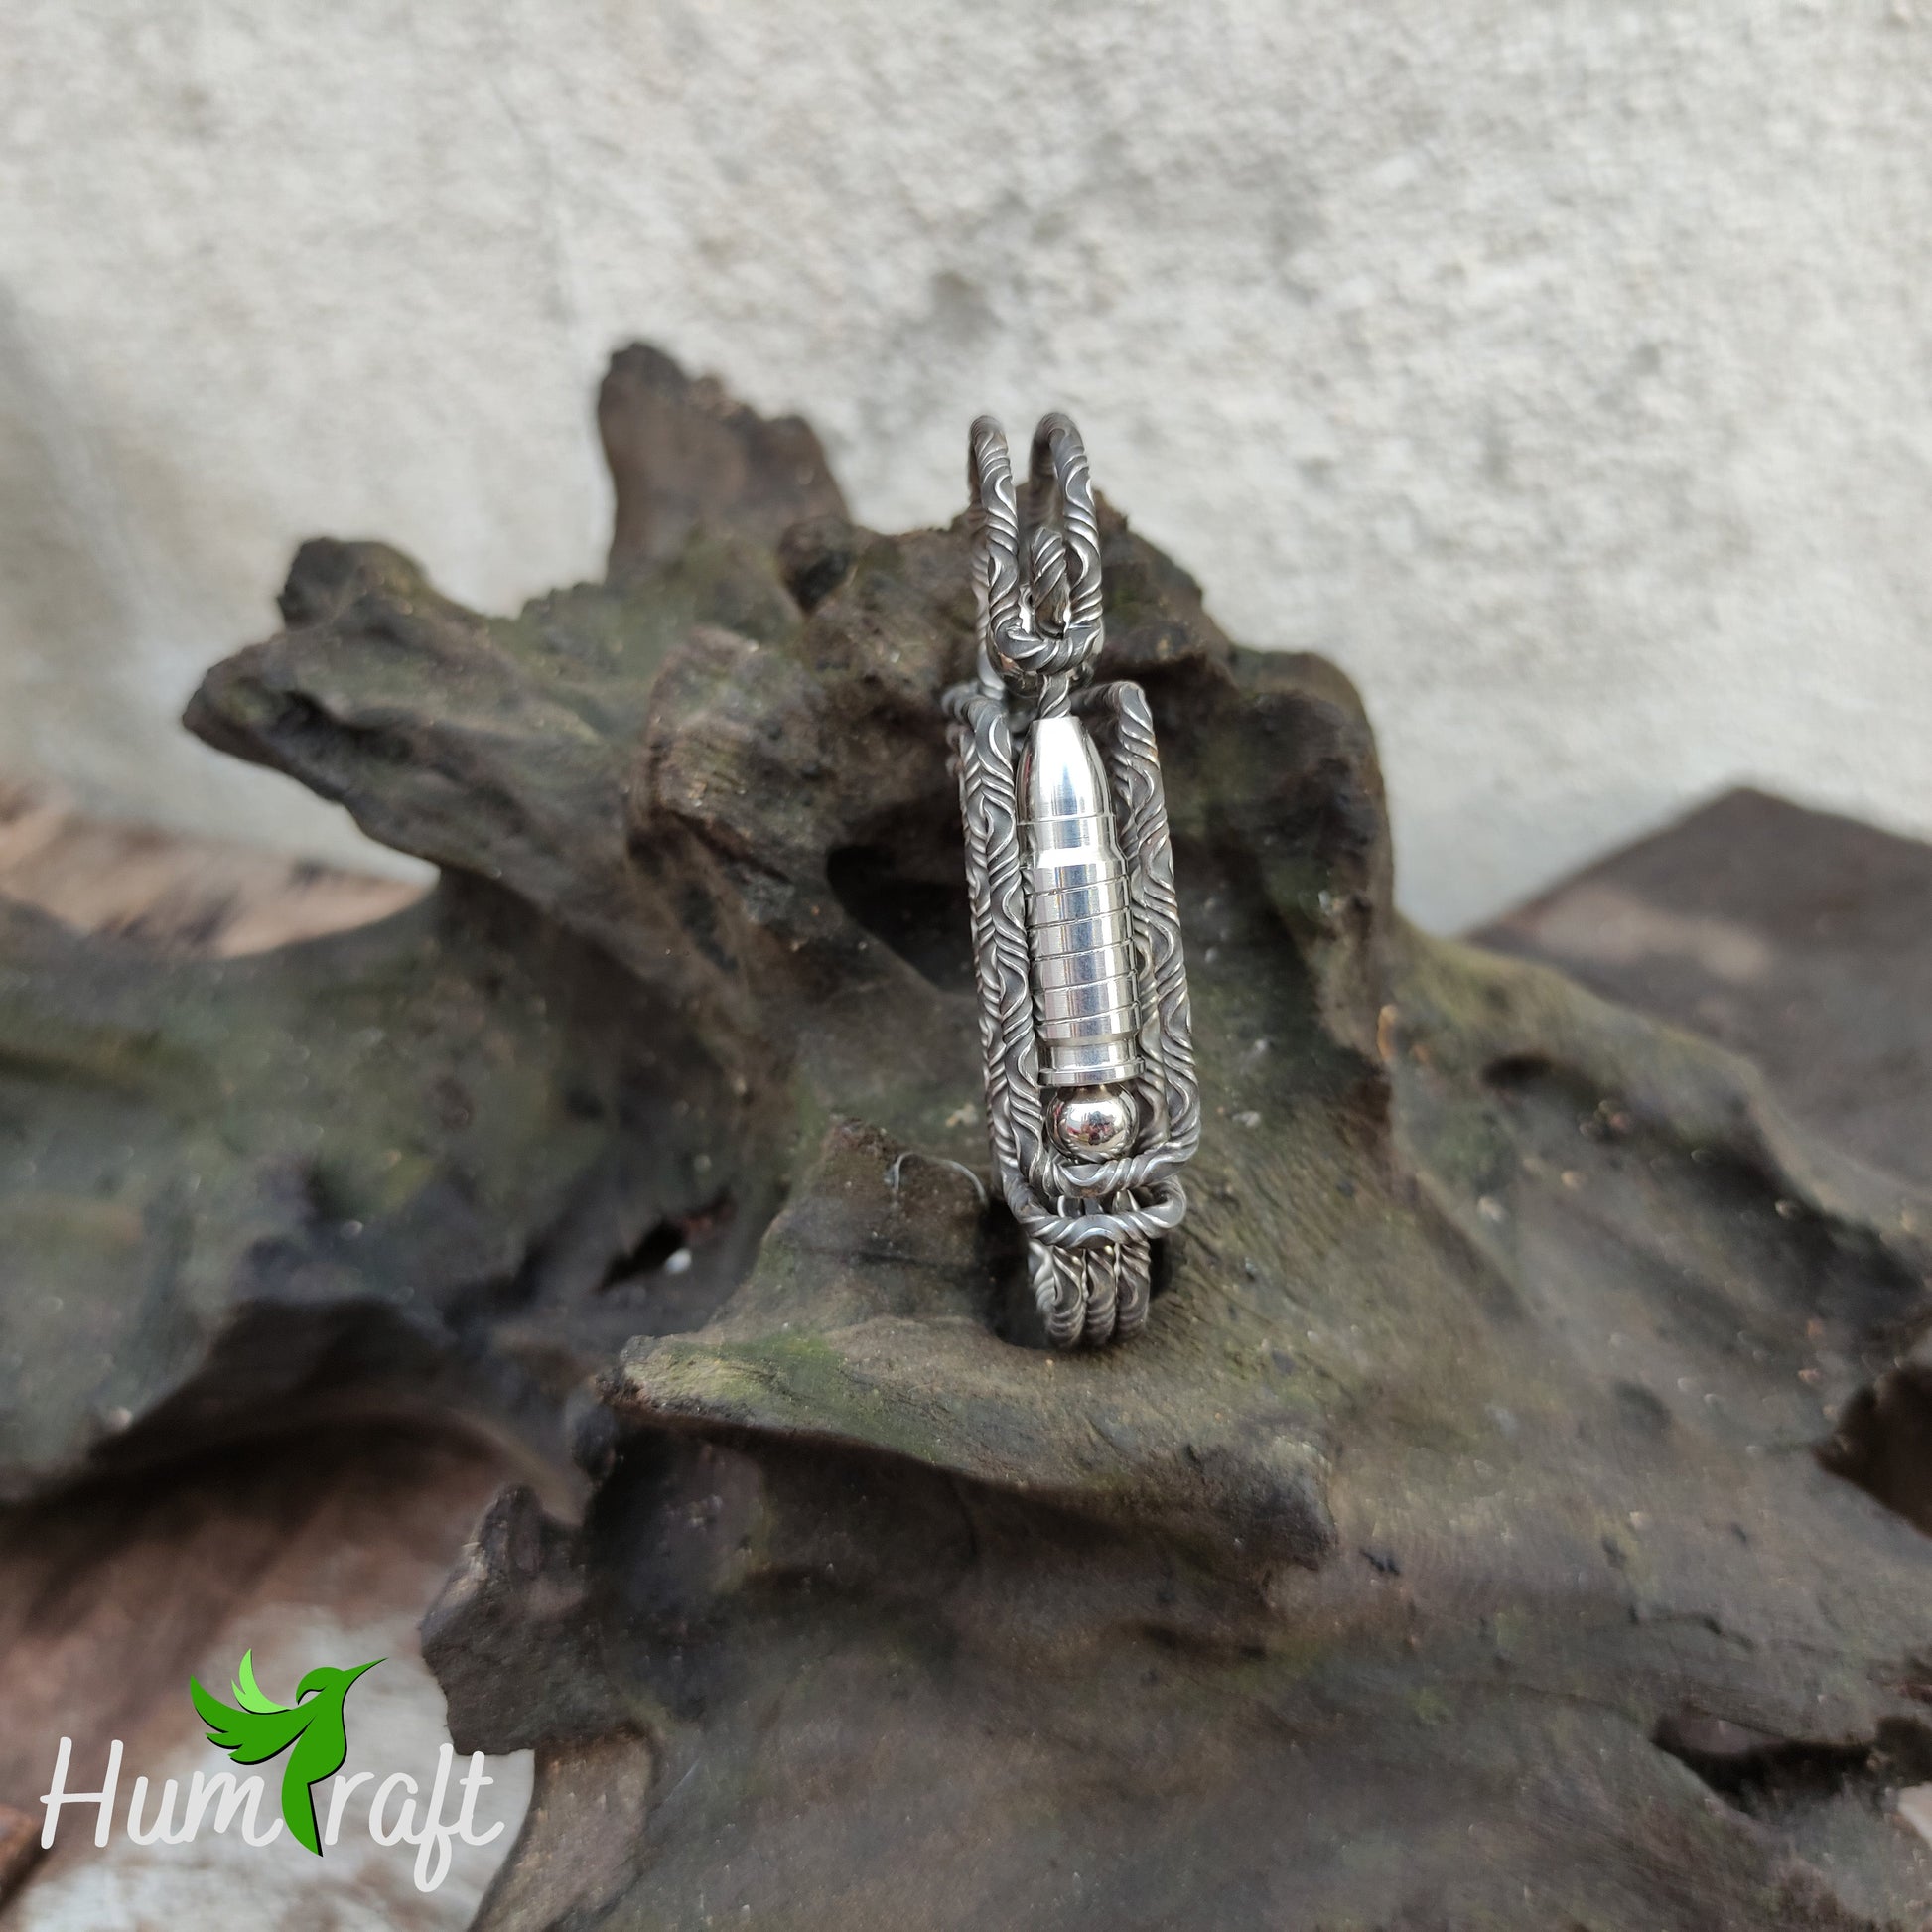 Handmade creative gifts - steel wire bullet keychain hooks